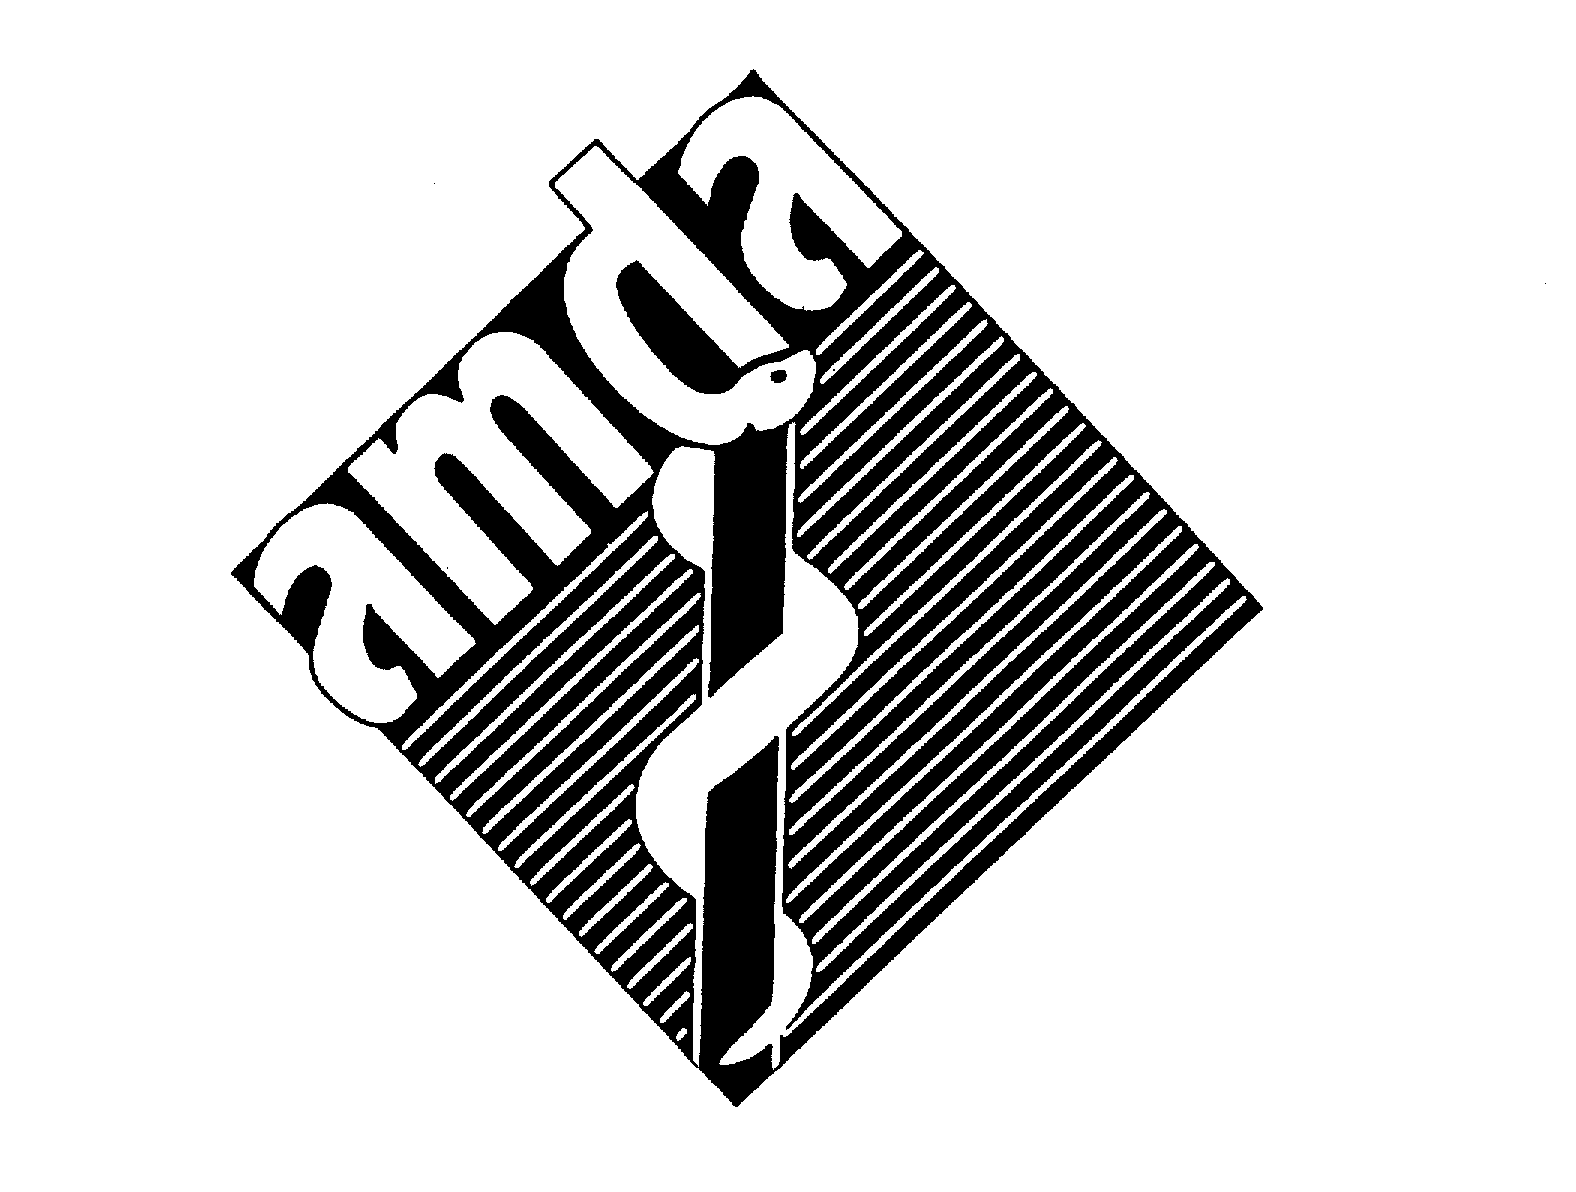 Trademark Logo AMDA